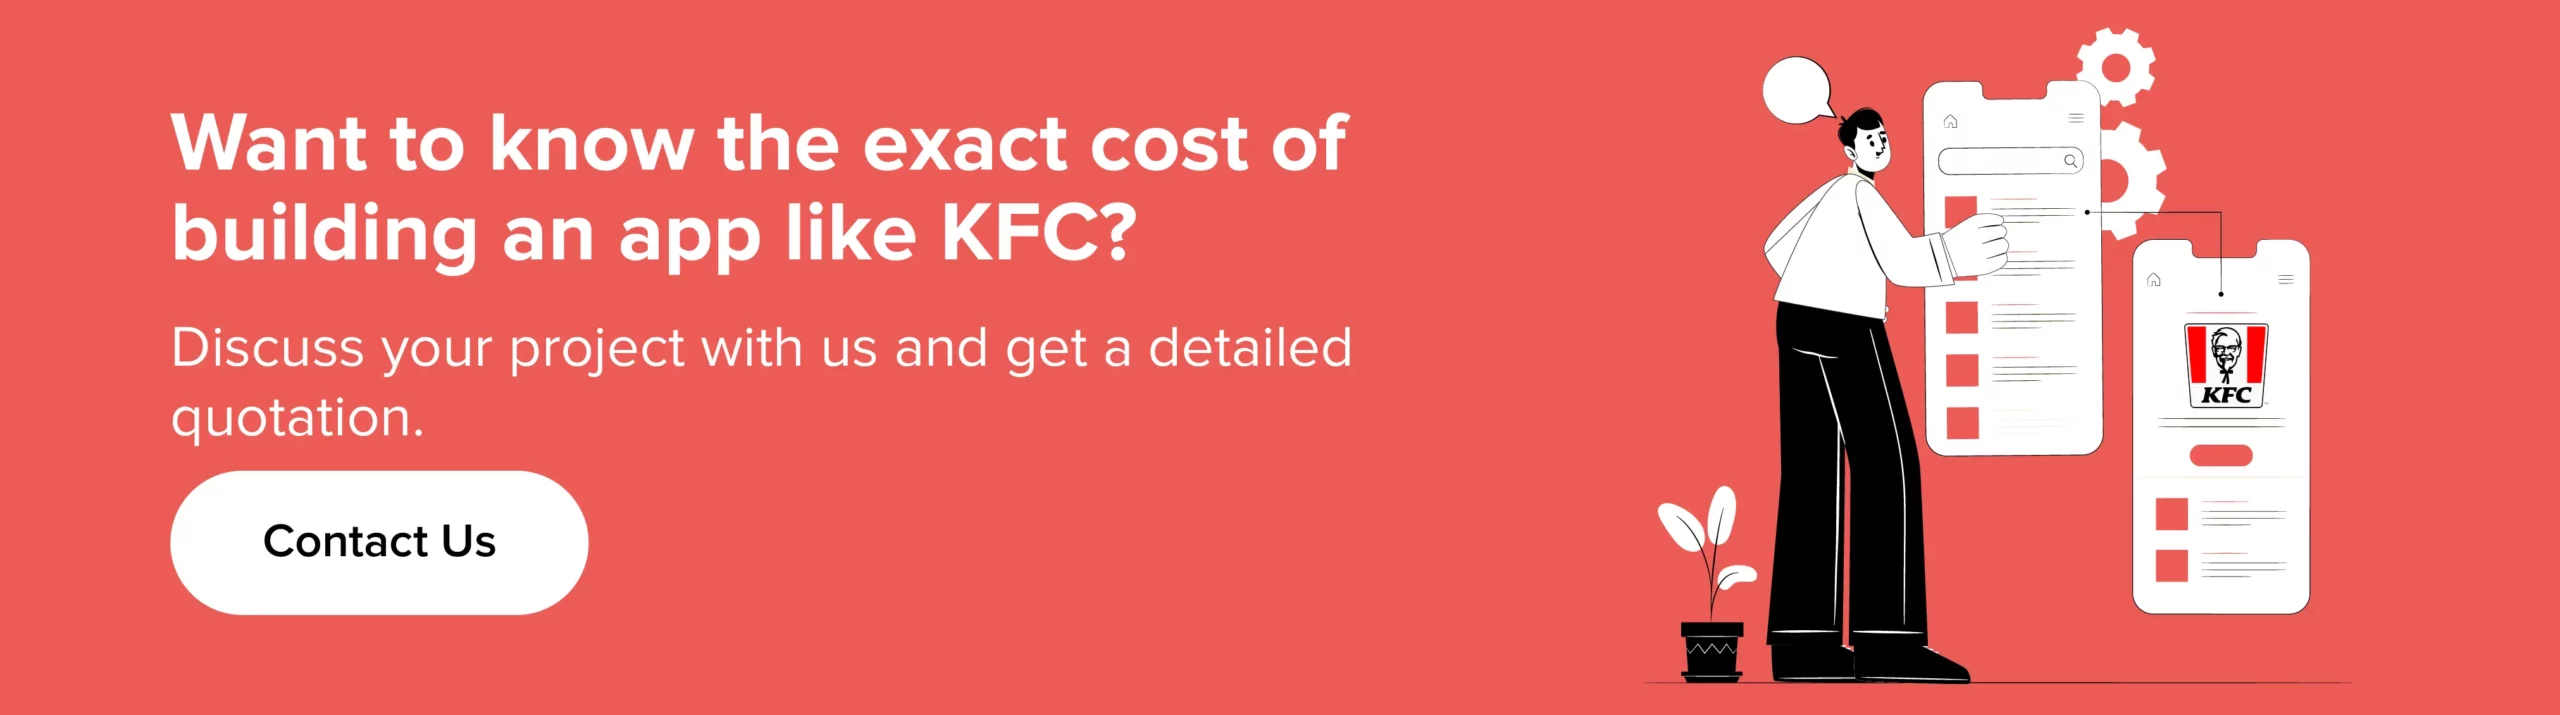 Cost of building an app like KFC